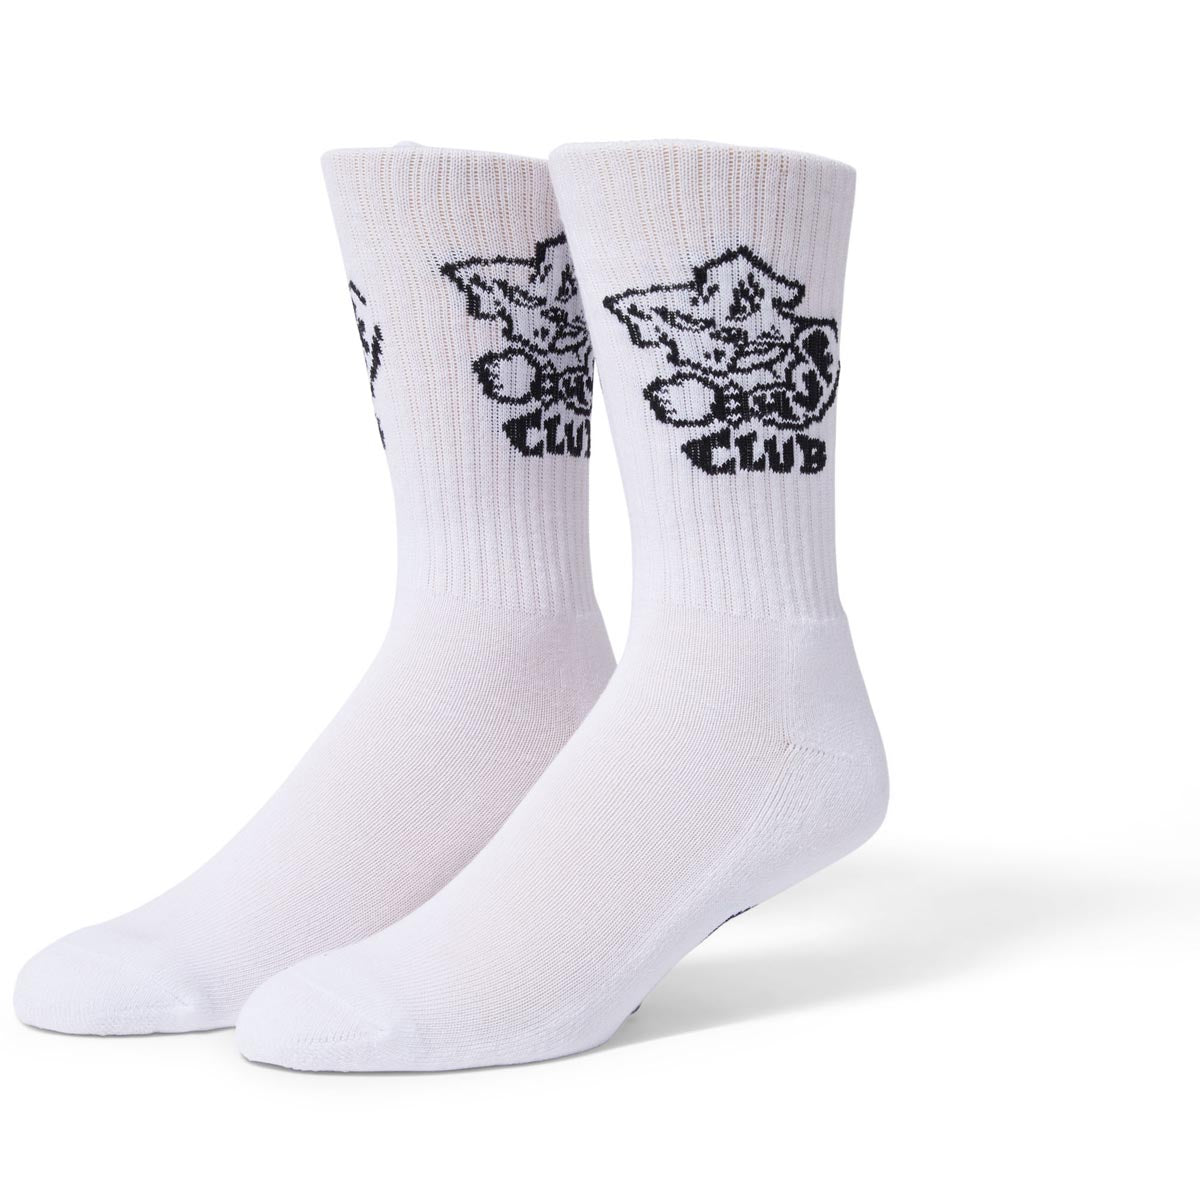 HUF Club Crew Socks - White image 1